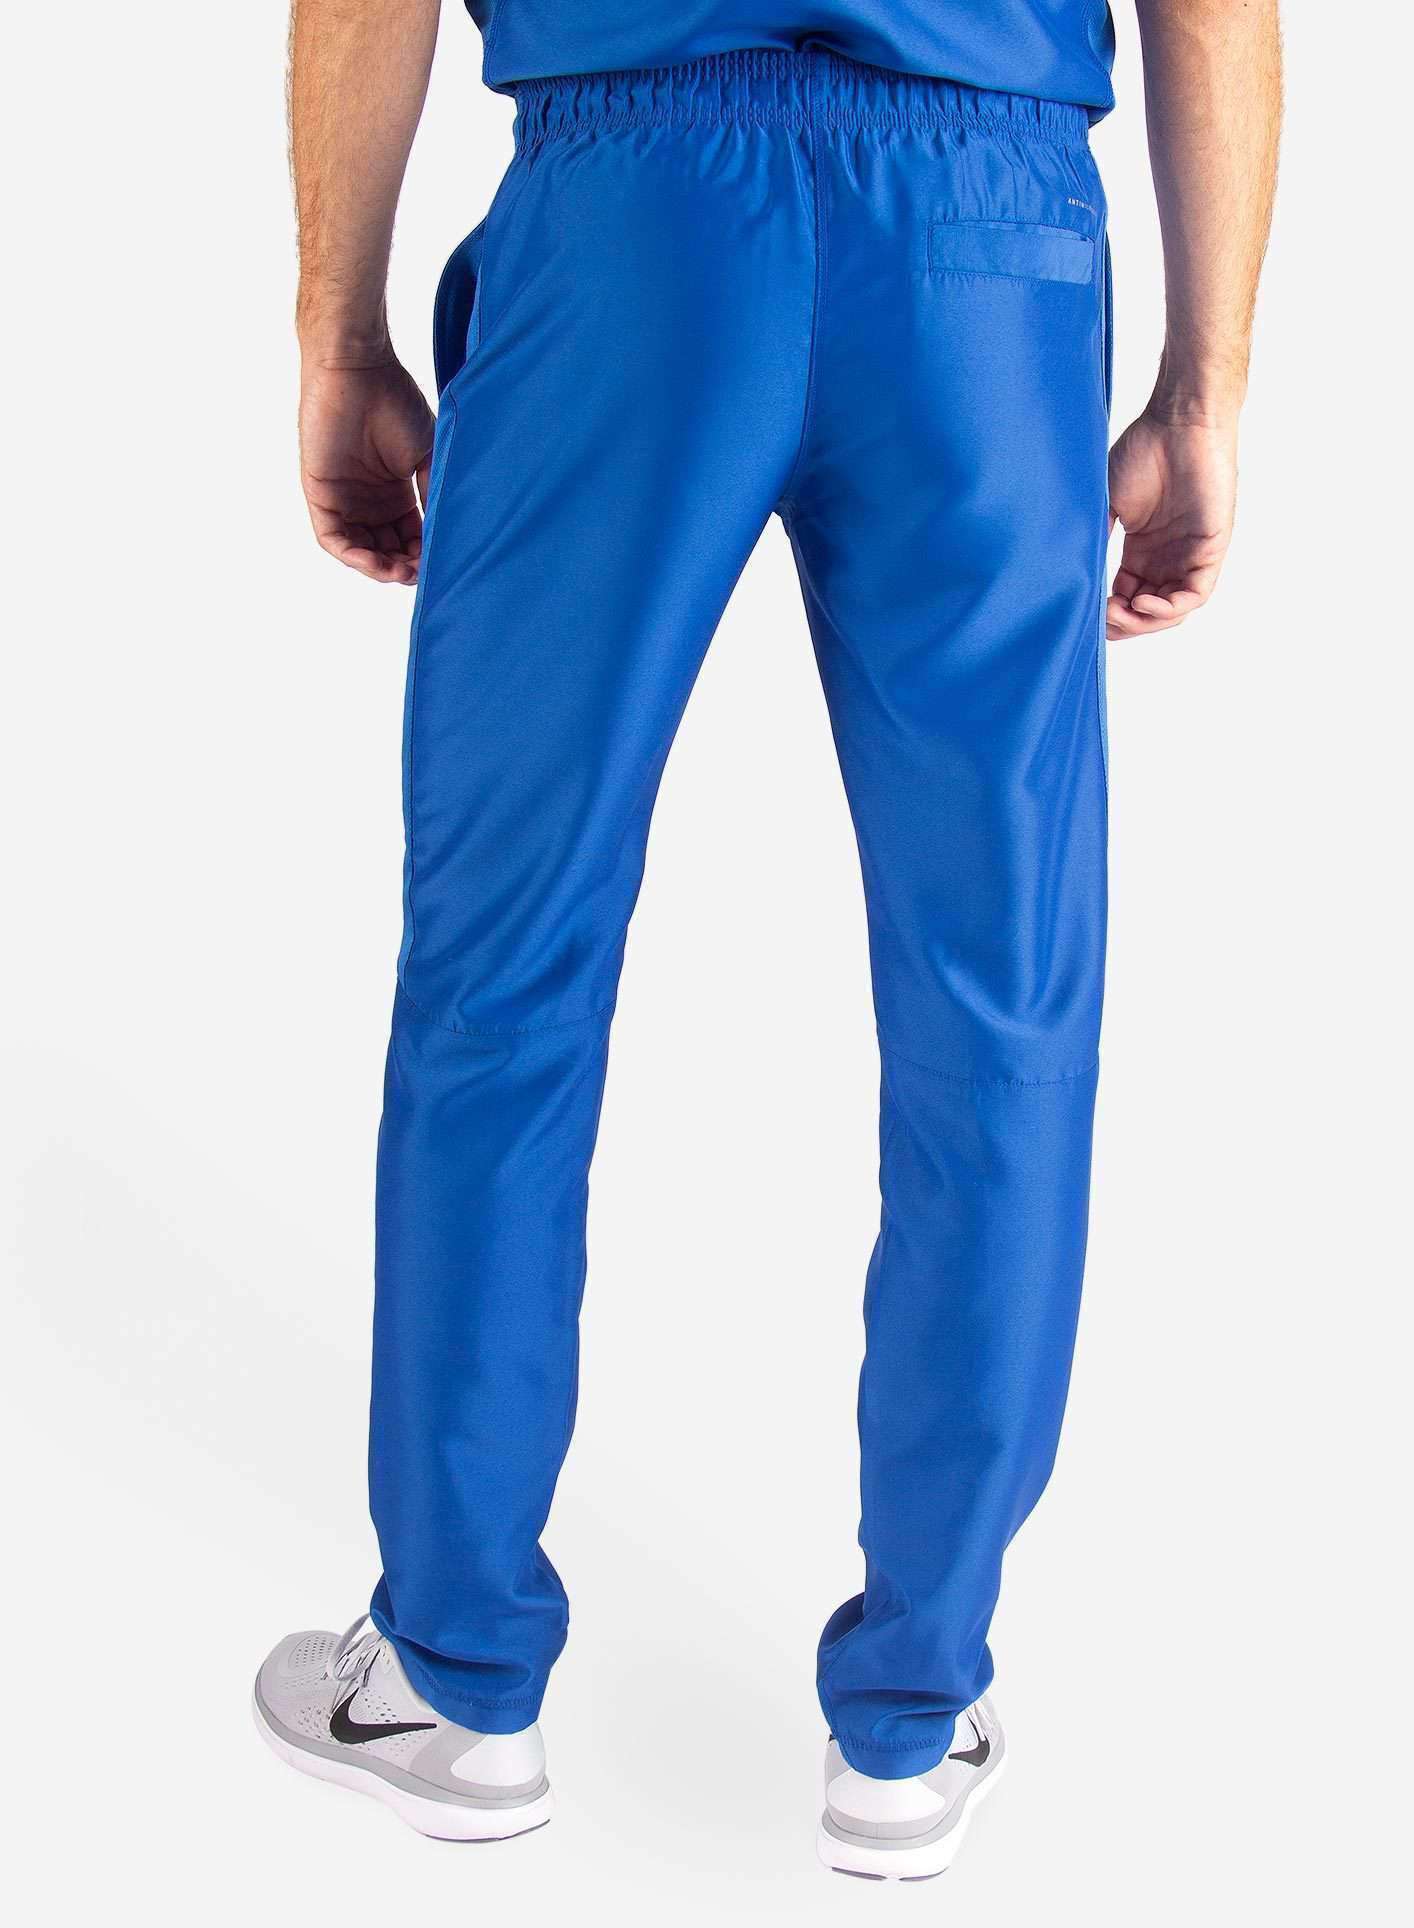 Men's Slim Fit Scrub Pants back in royal-blue